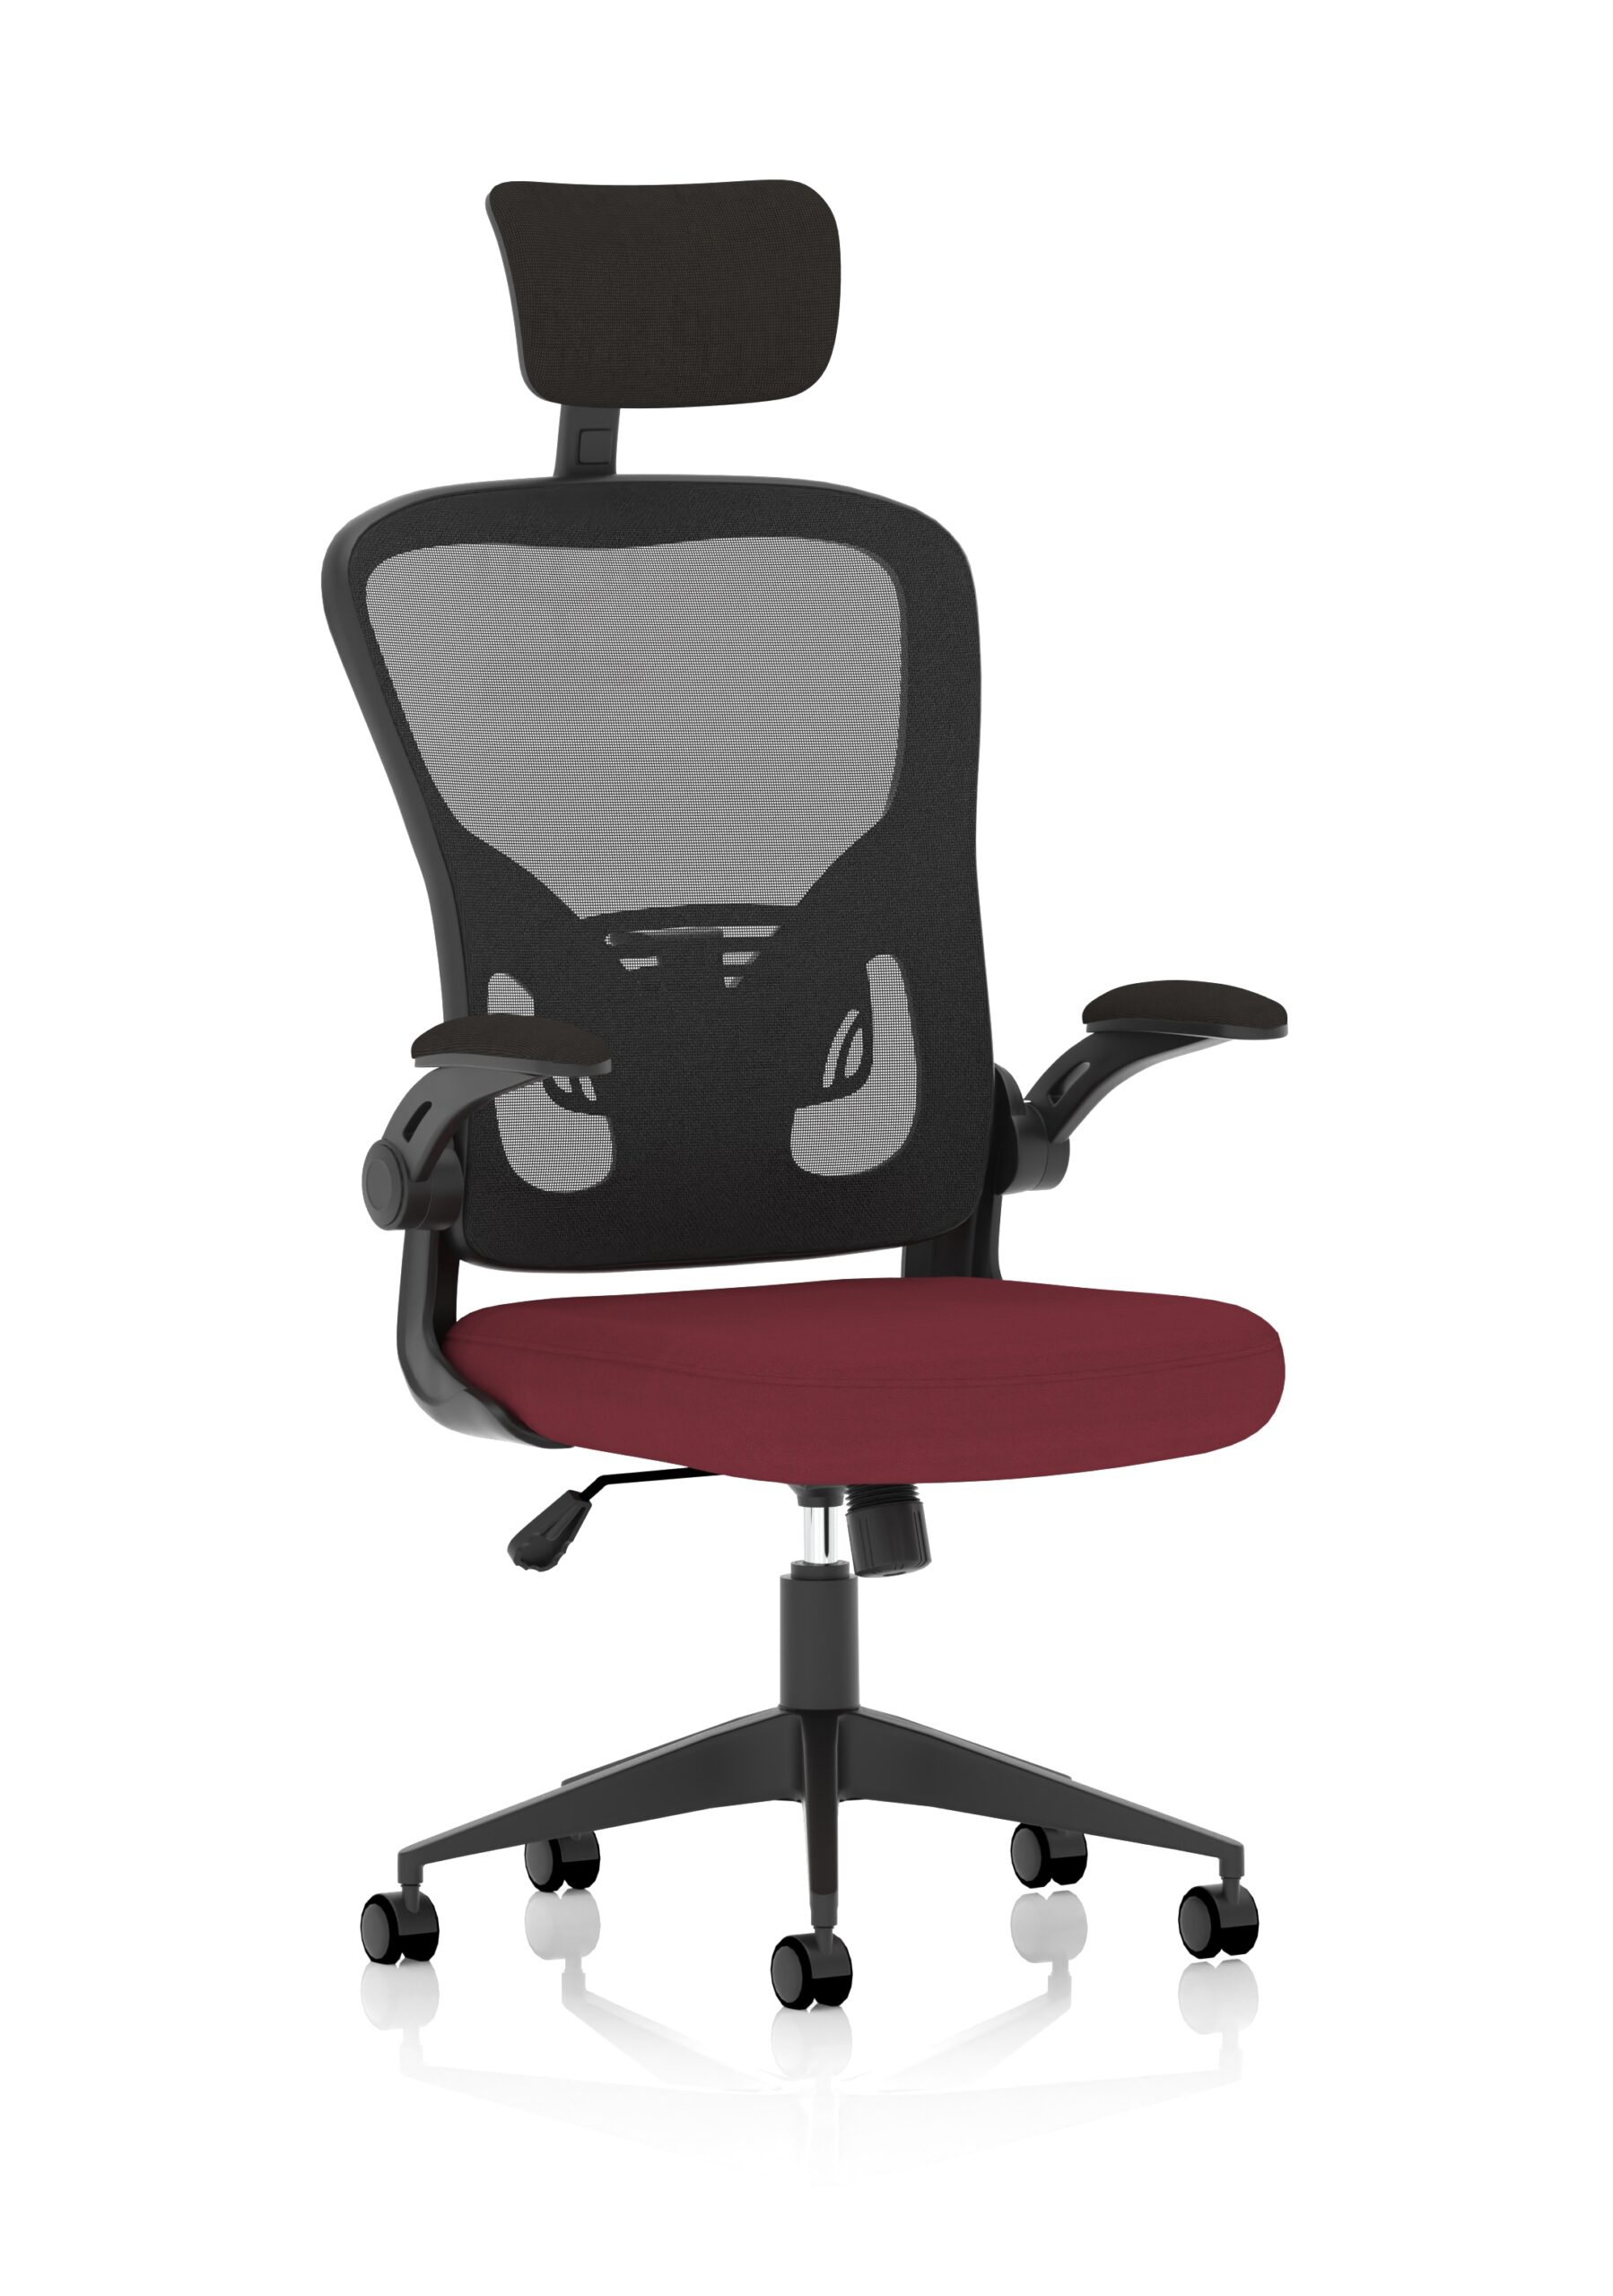 Masino Executive Bespoke Fabric Seat Ginseng Chilli Mesh Chair With Folding Arms